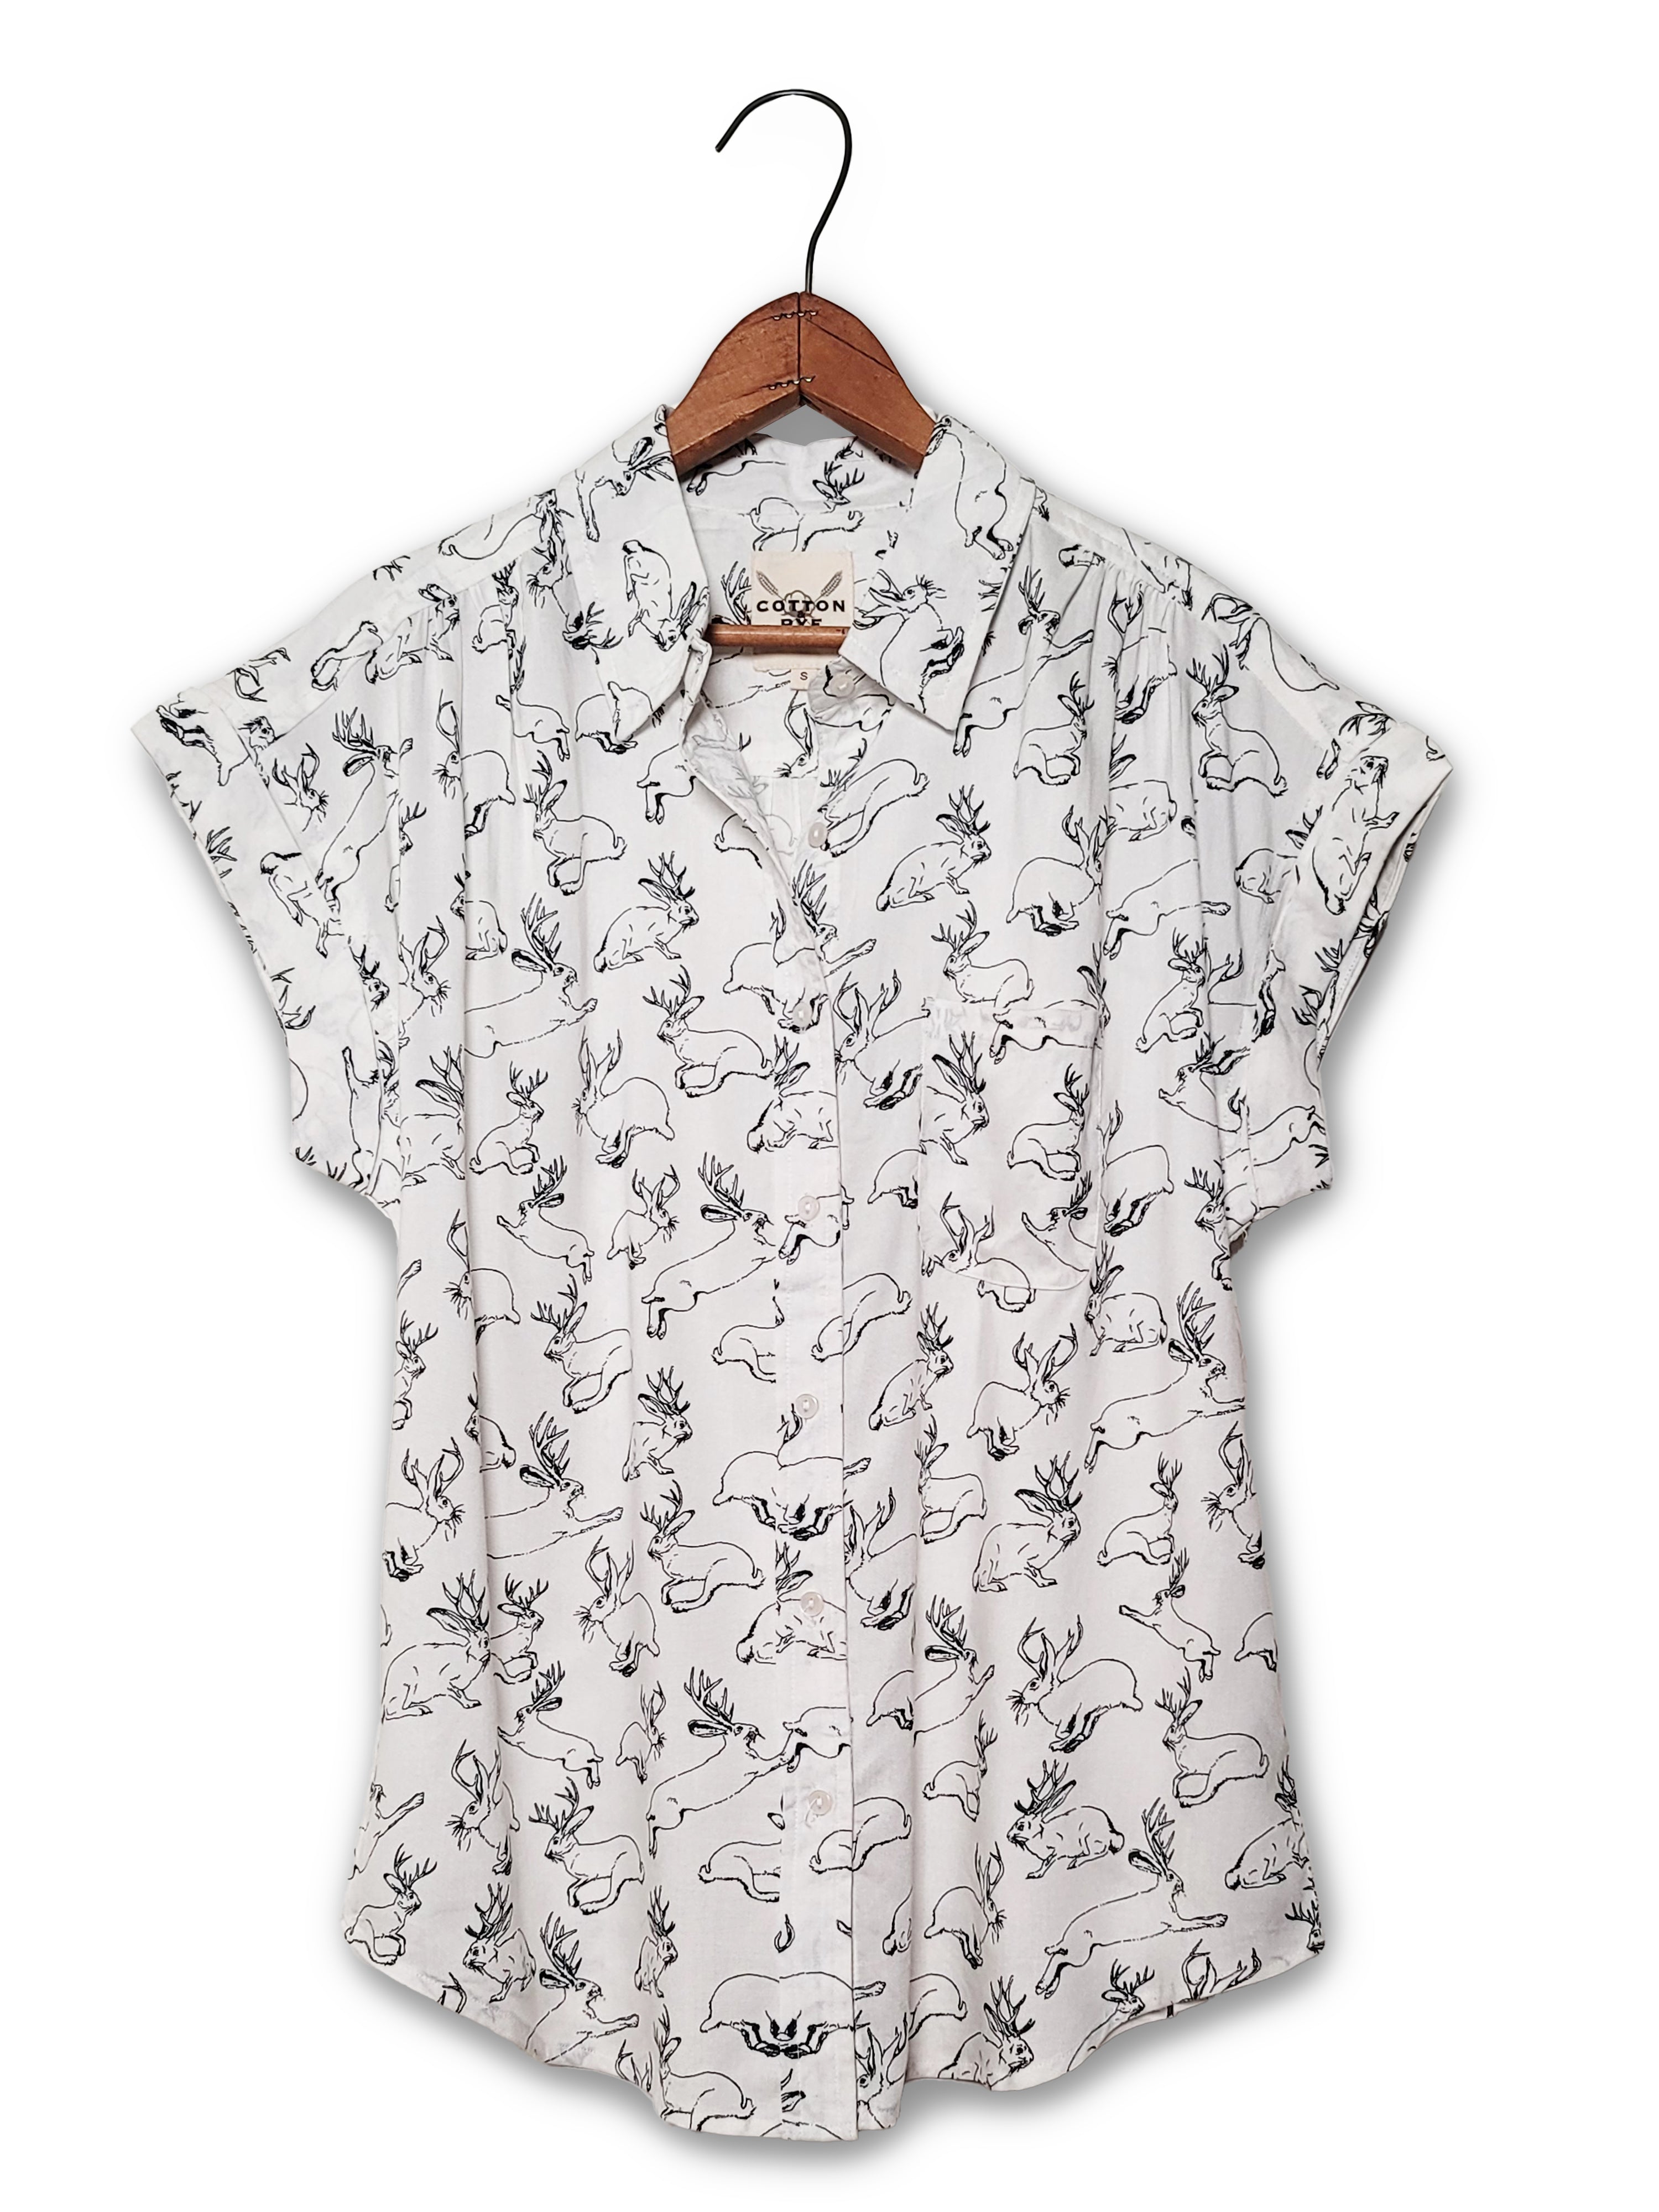 Jackalope Shirt by Cotton & Rye